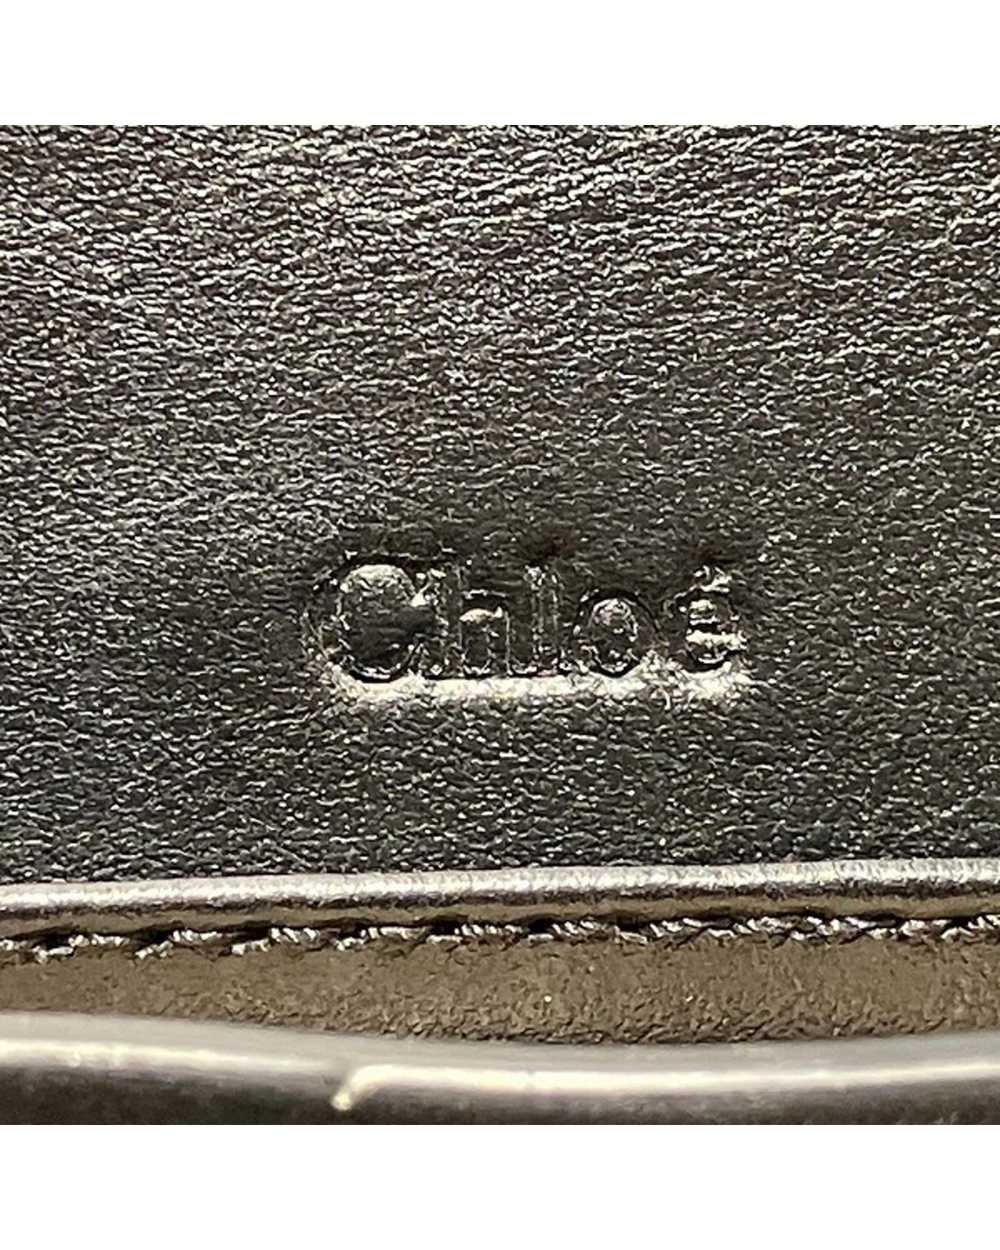 Chloe Refined Black Leather Long Wallet for Women - image 4